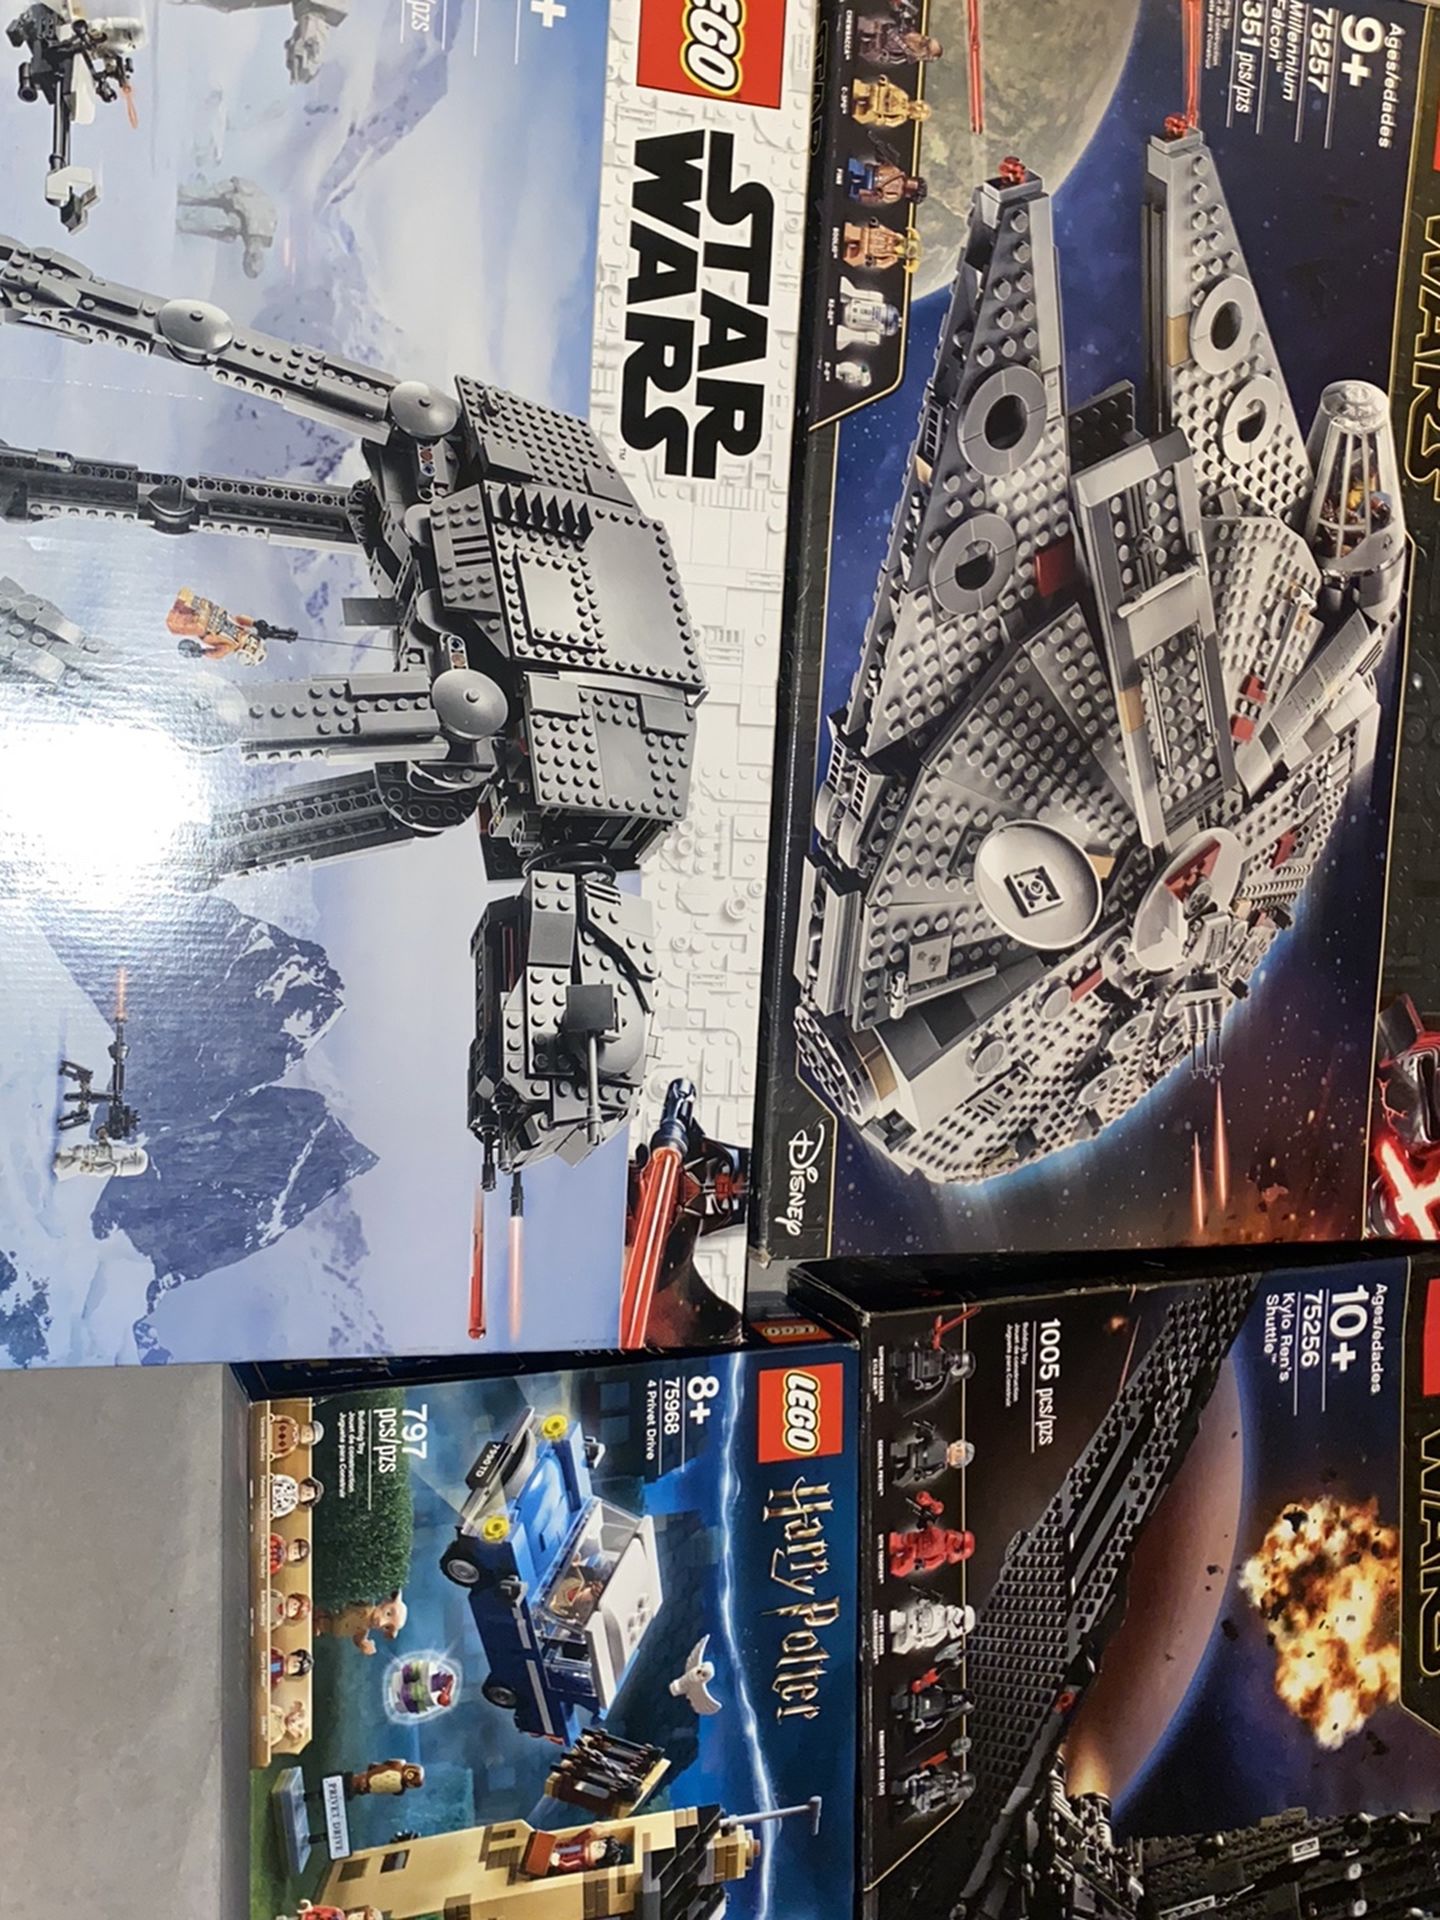 Star Wars Legos & Harry Potter Sets